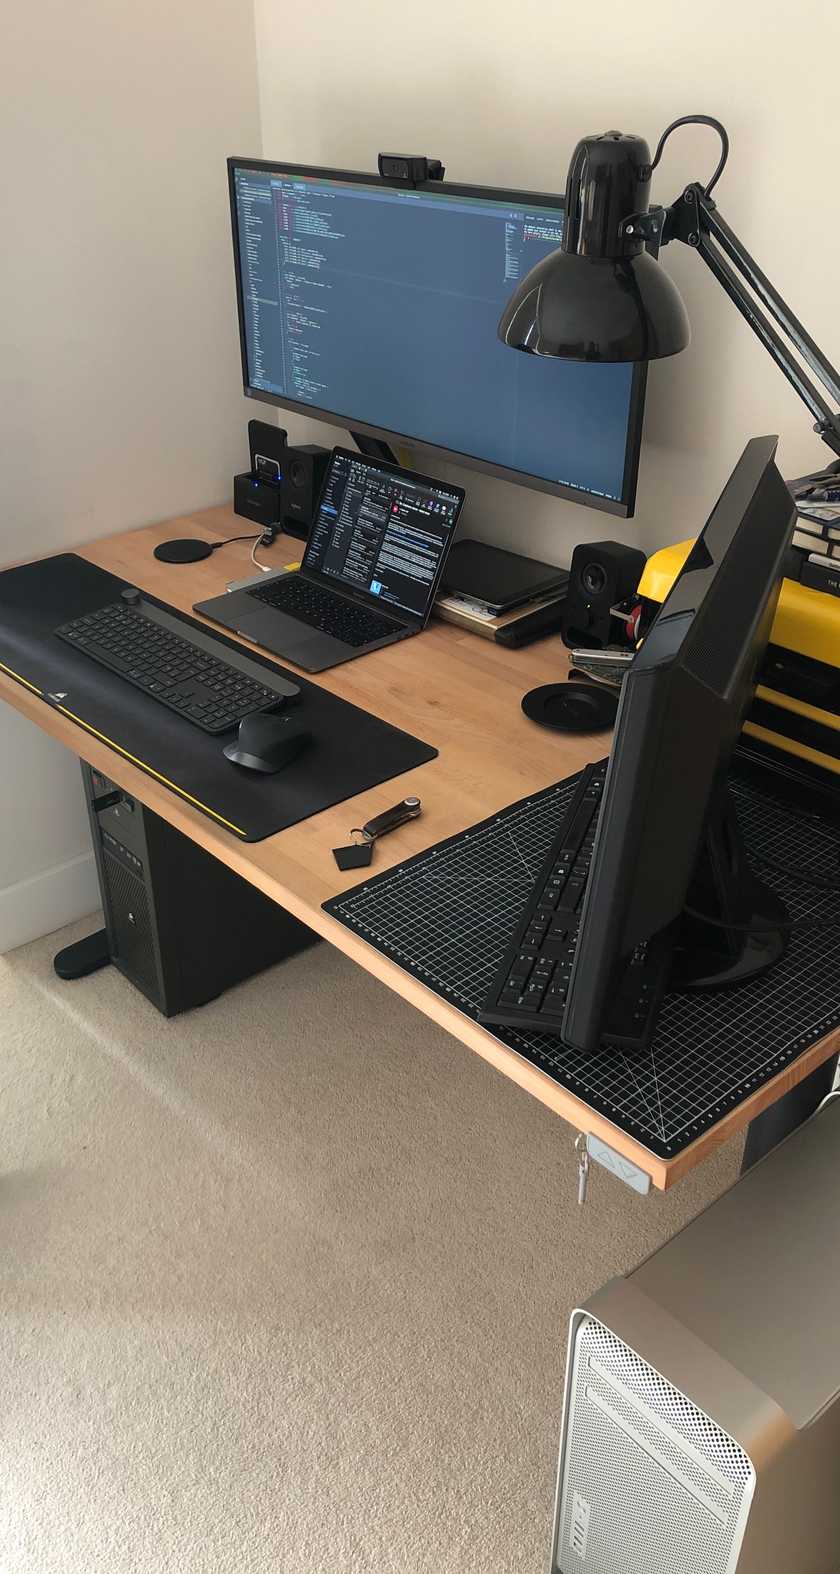 My desk in February, 2019